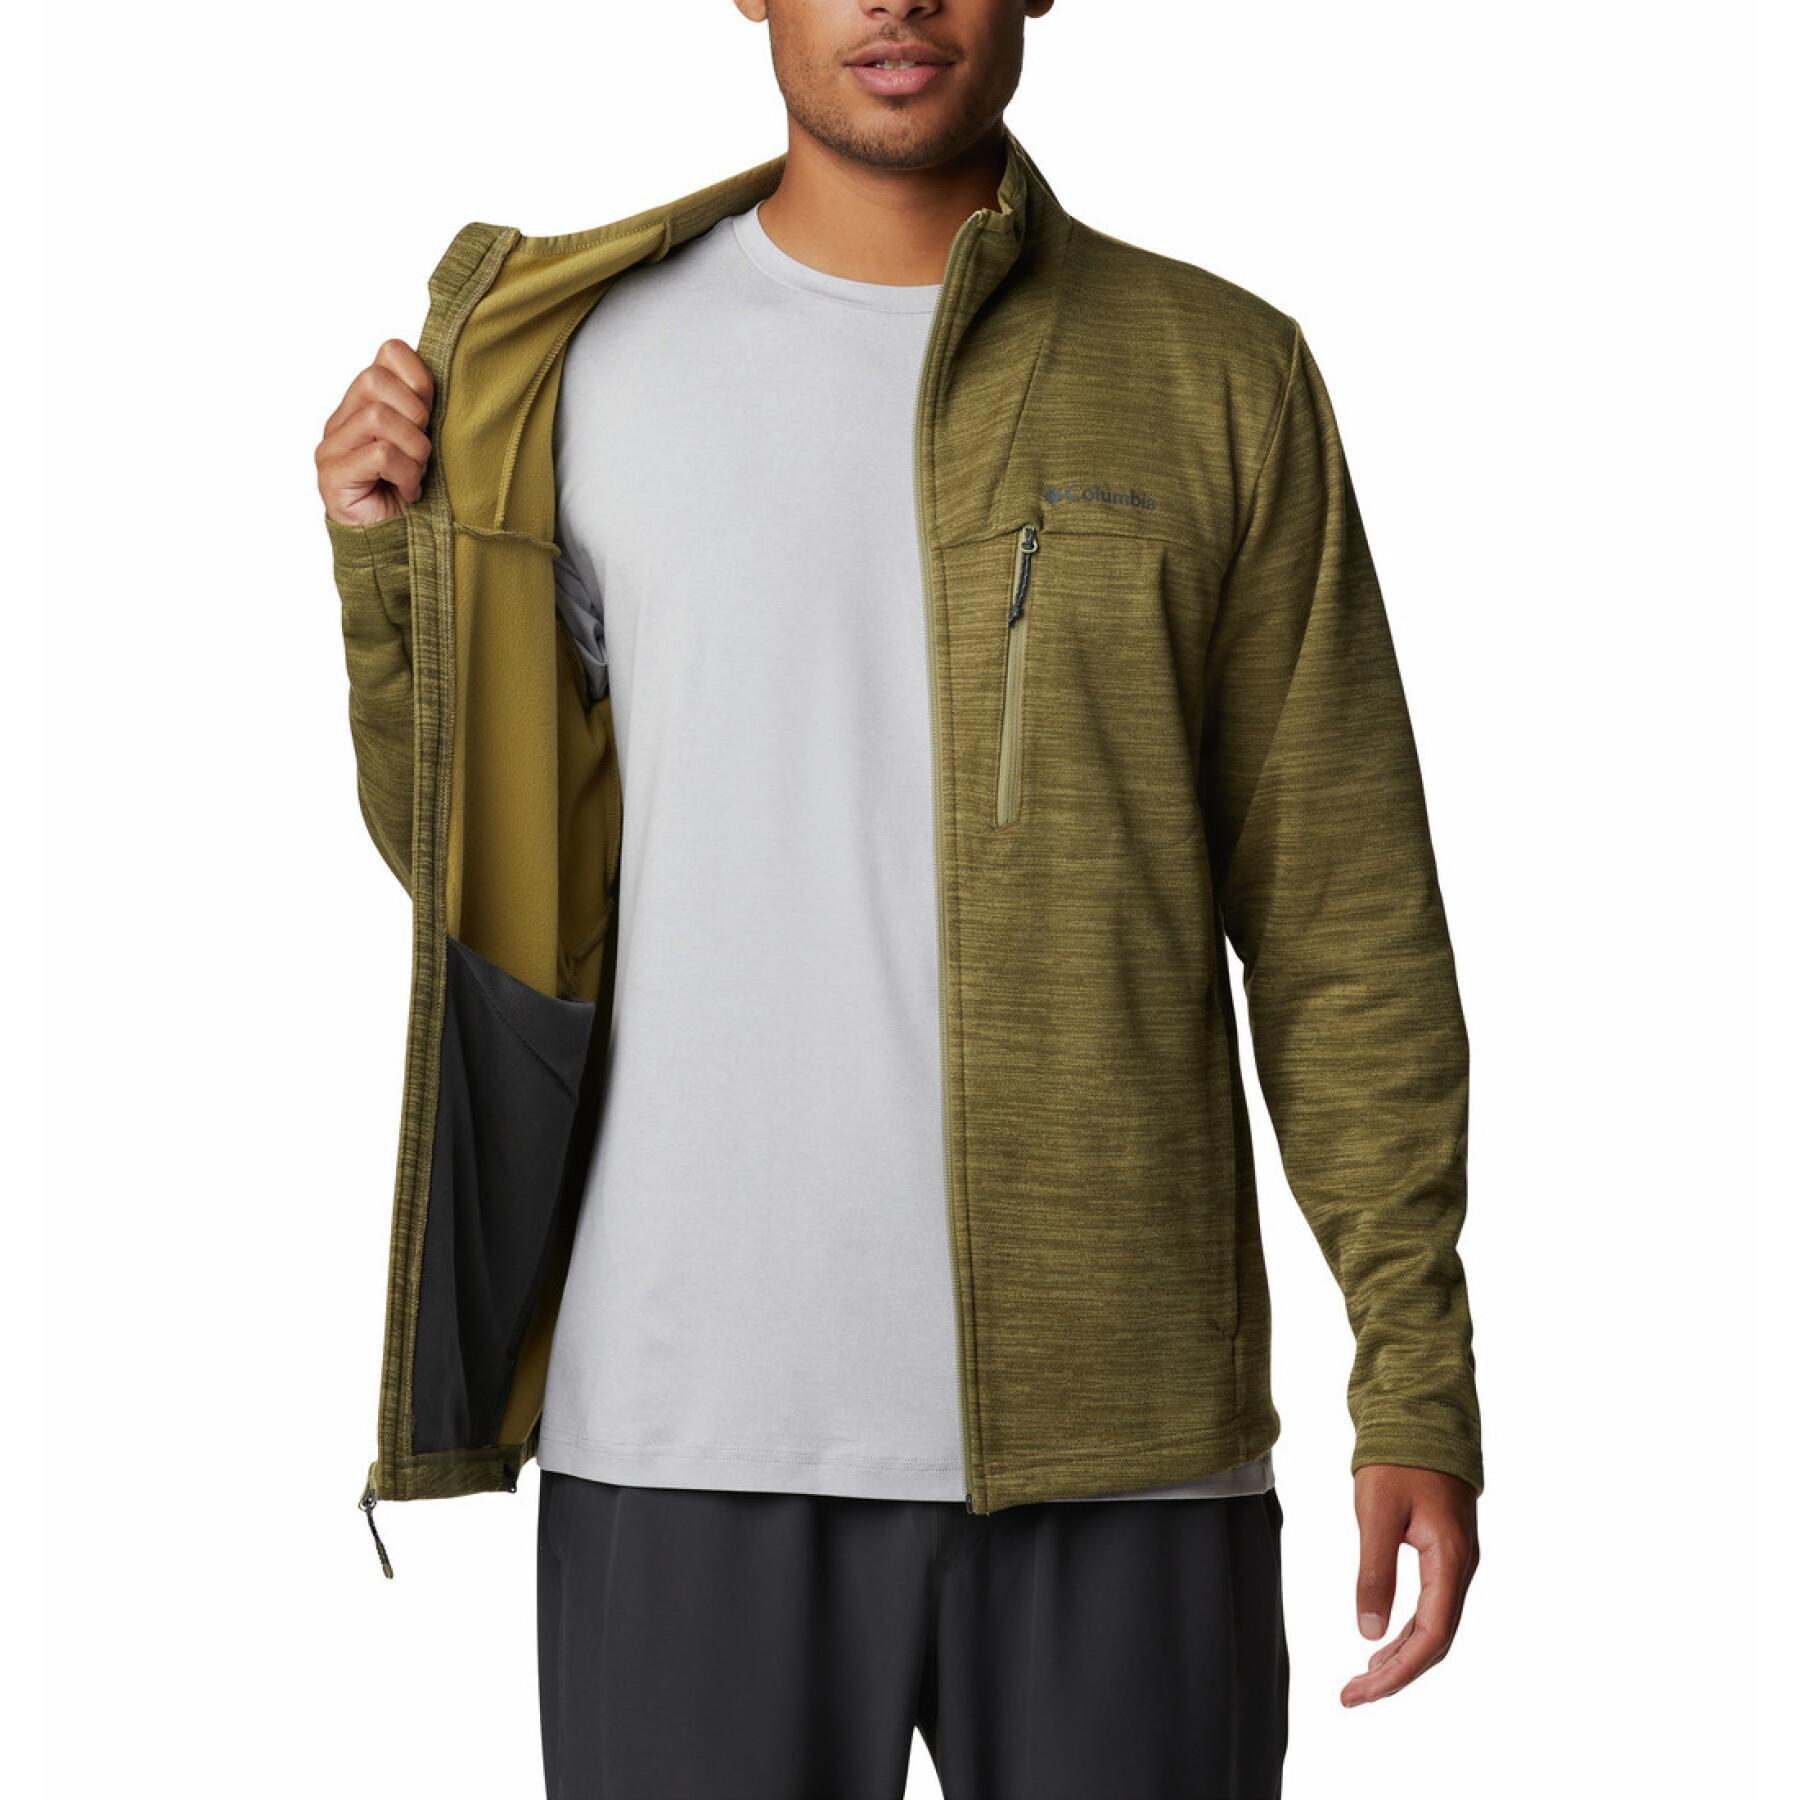 Full zip sweatshirt Columbia Maxtrail Fleece